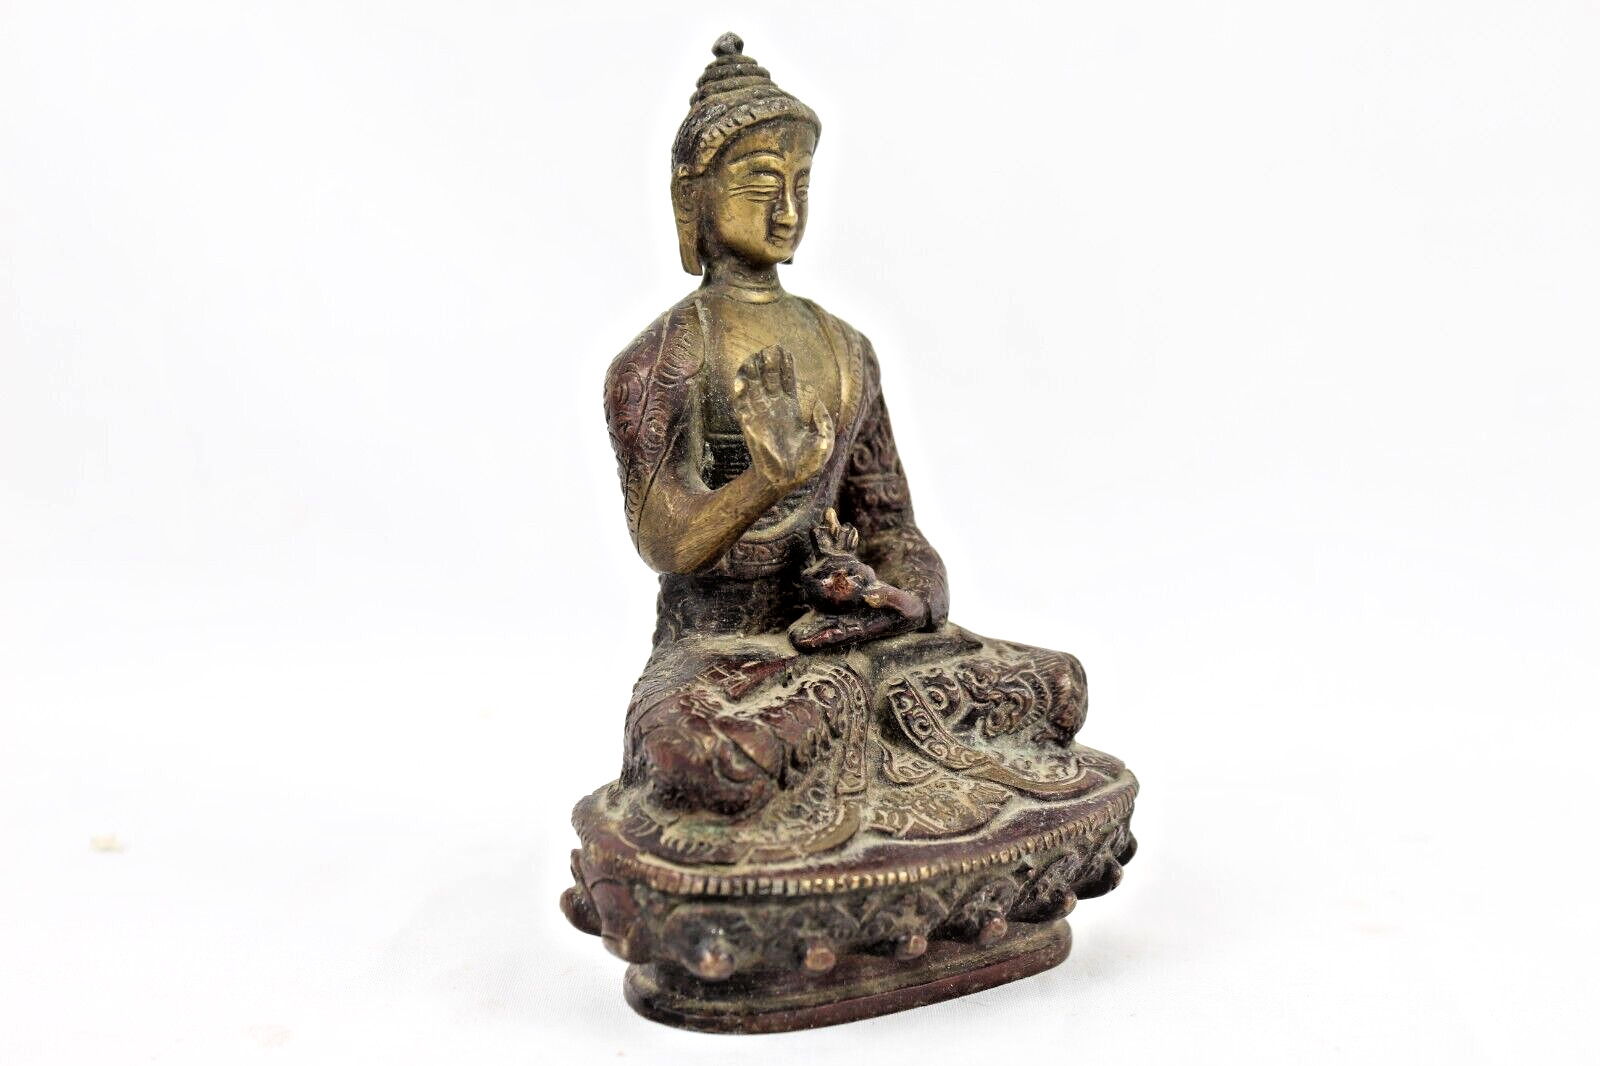 Handmade Antique Style Buddha Statue Tibetan Buddhism Decorative Figurine